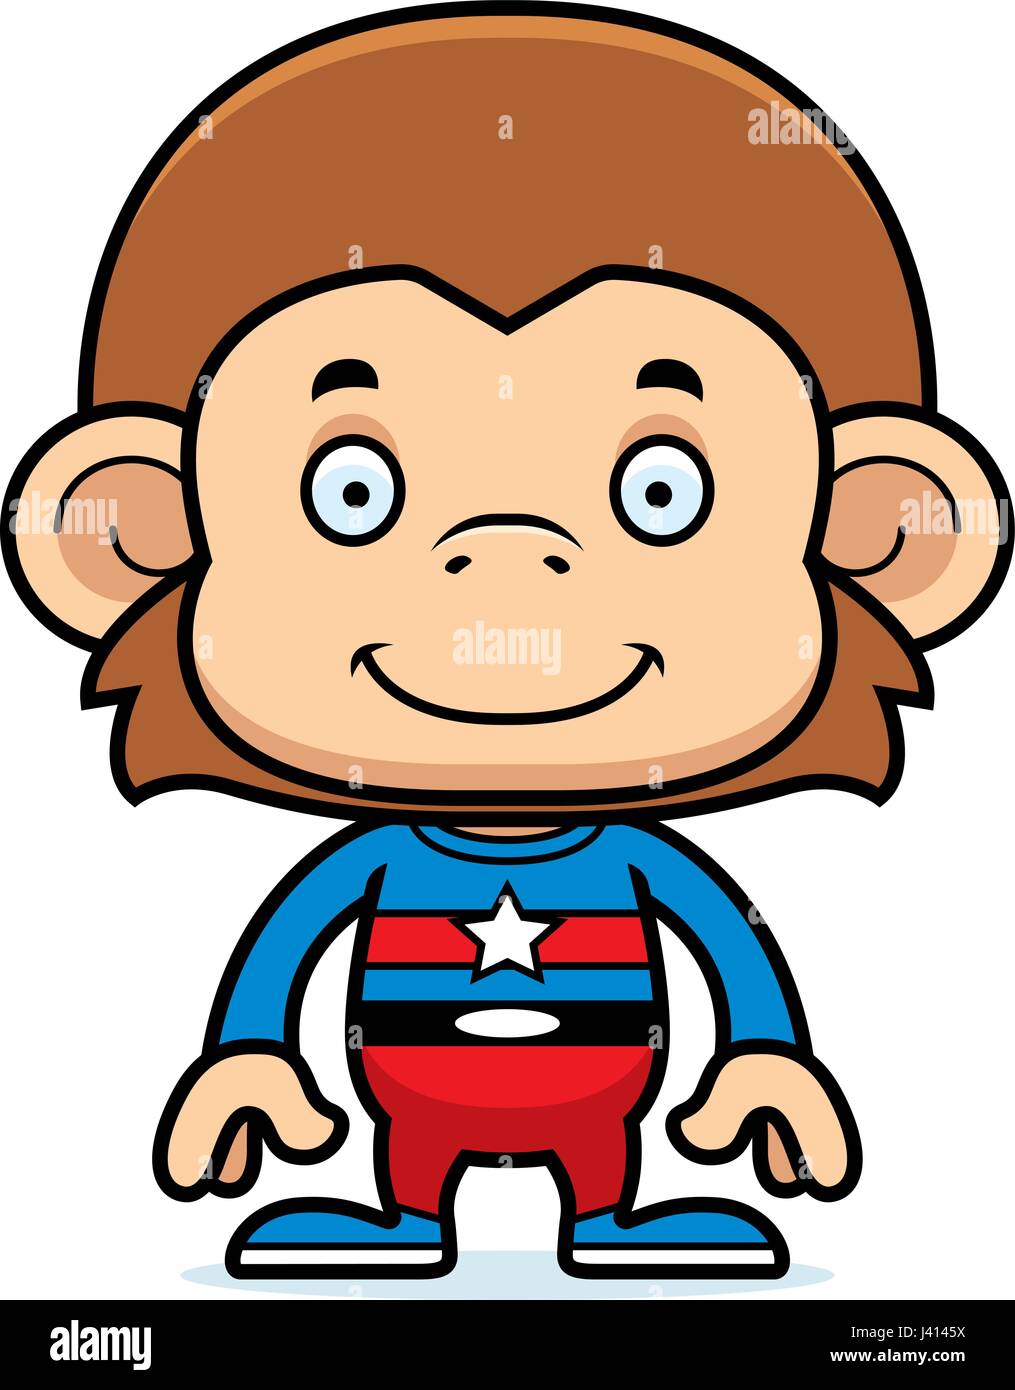 A cartoon superhero monkey smiling. Stock Vector